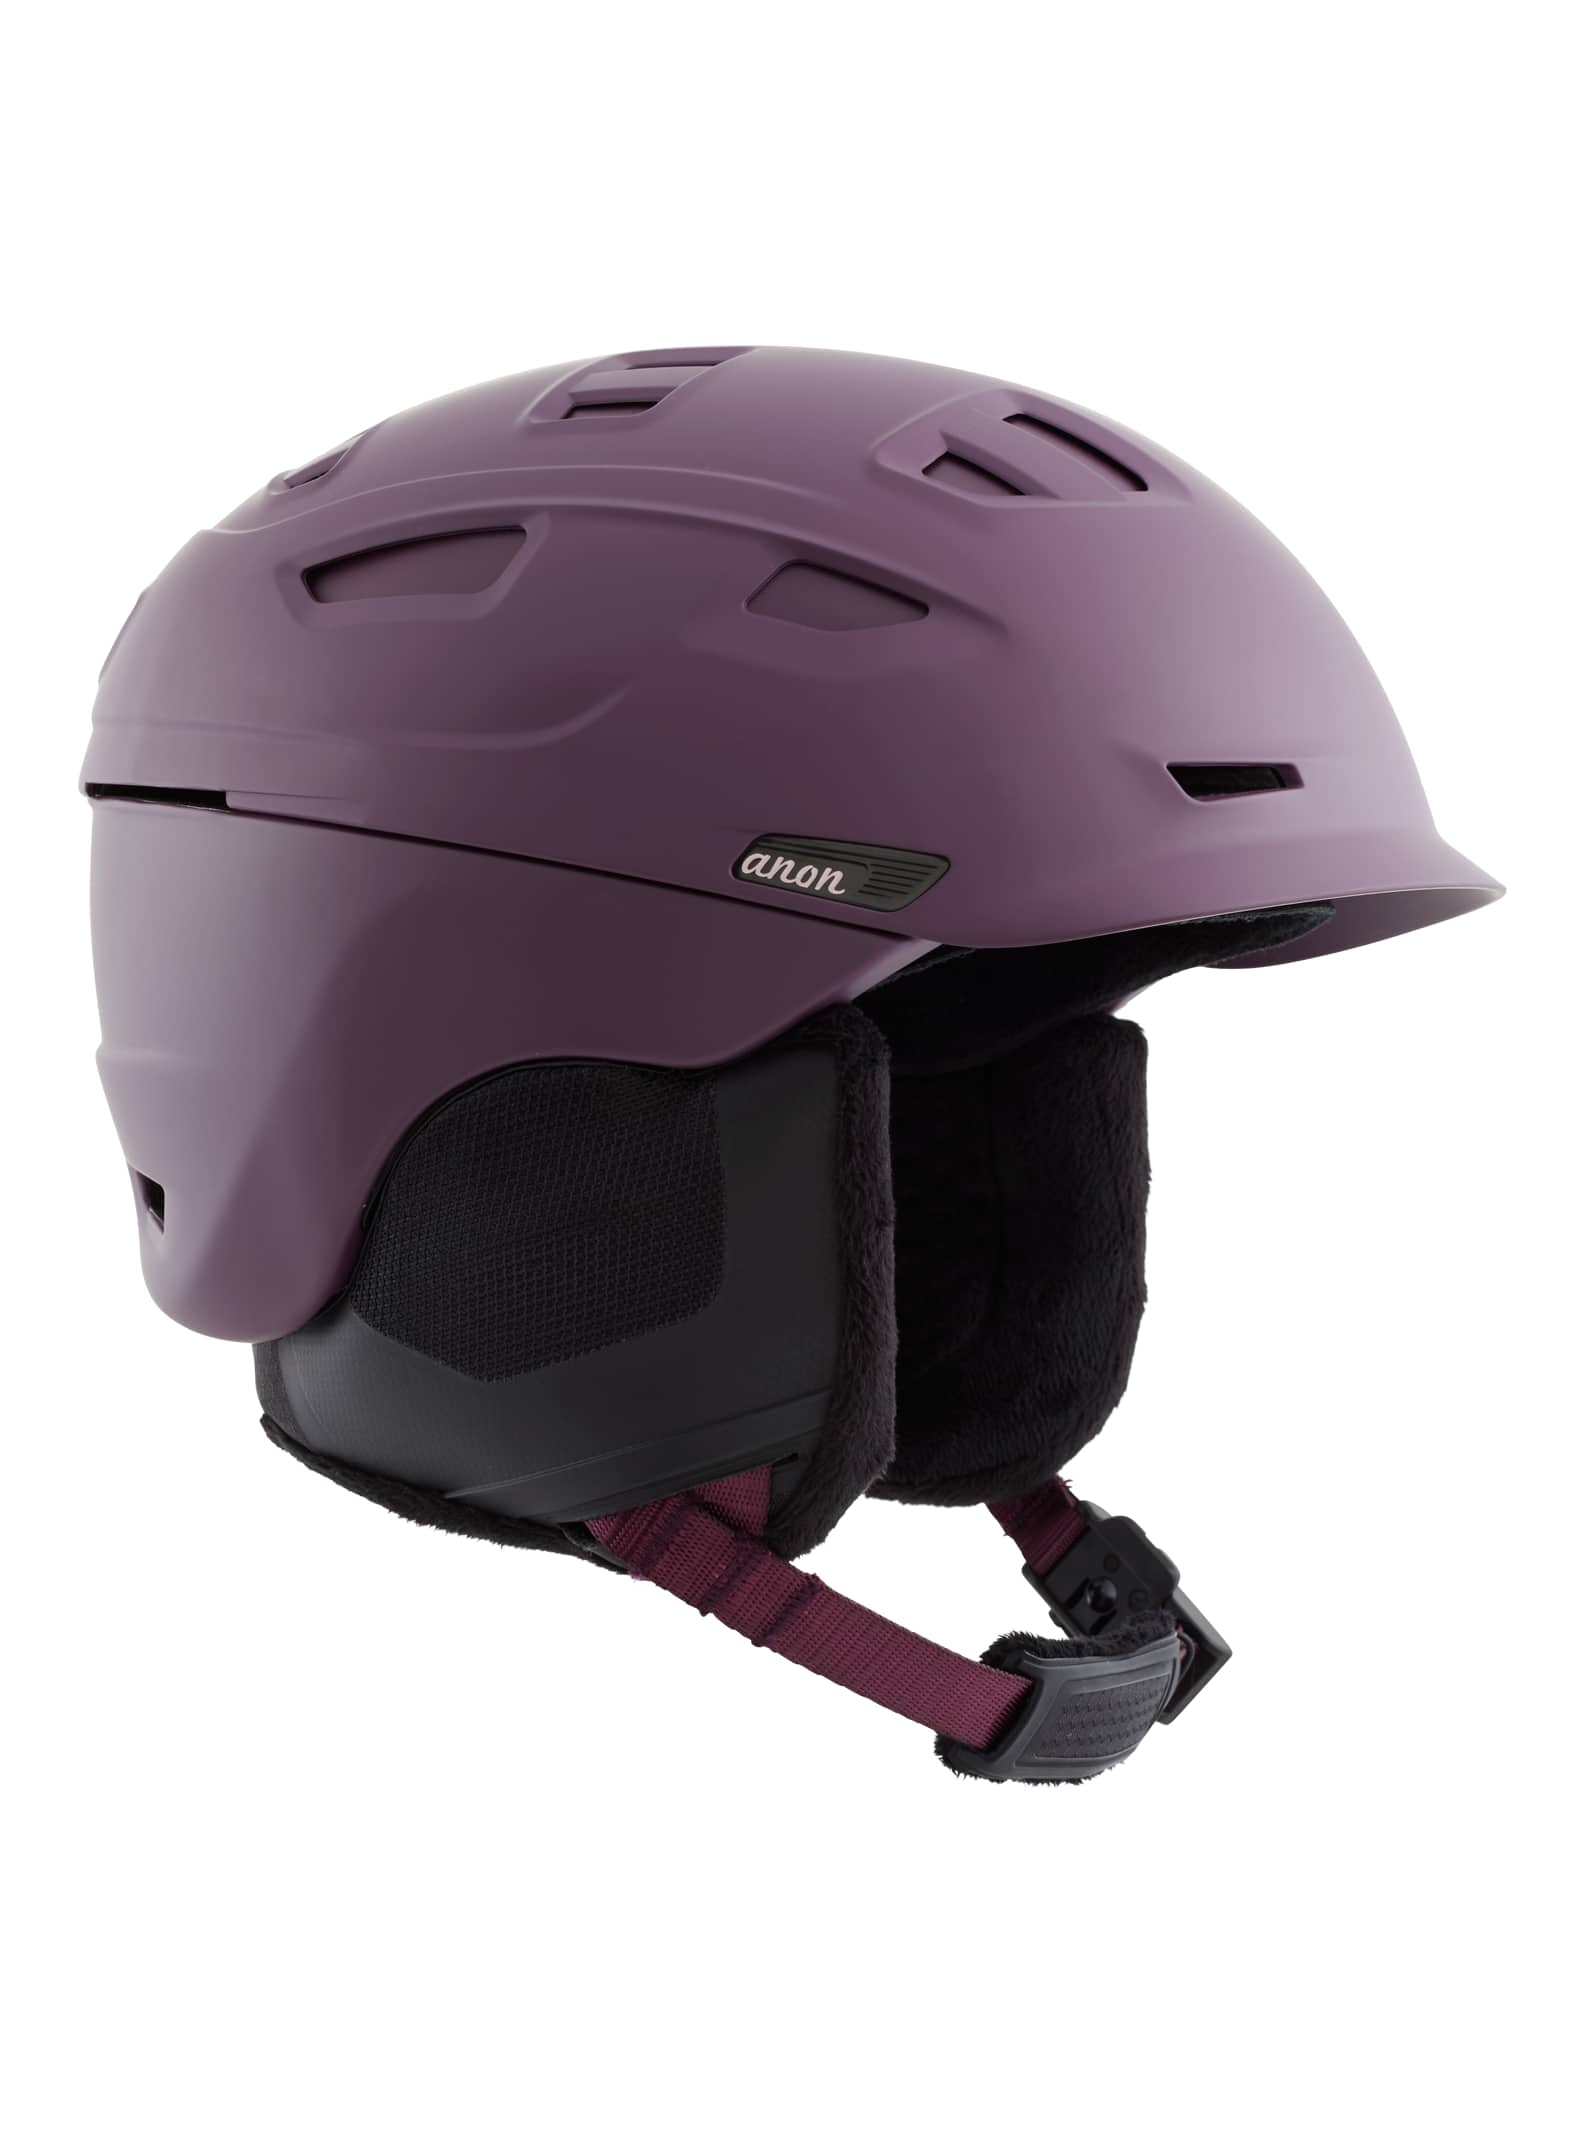 Women's Anon Nova MIPS Helmet | Burton.com Winter 2021